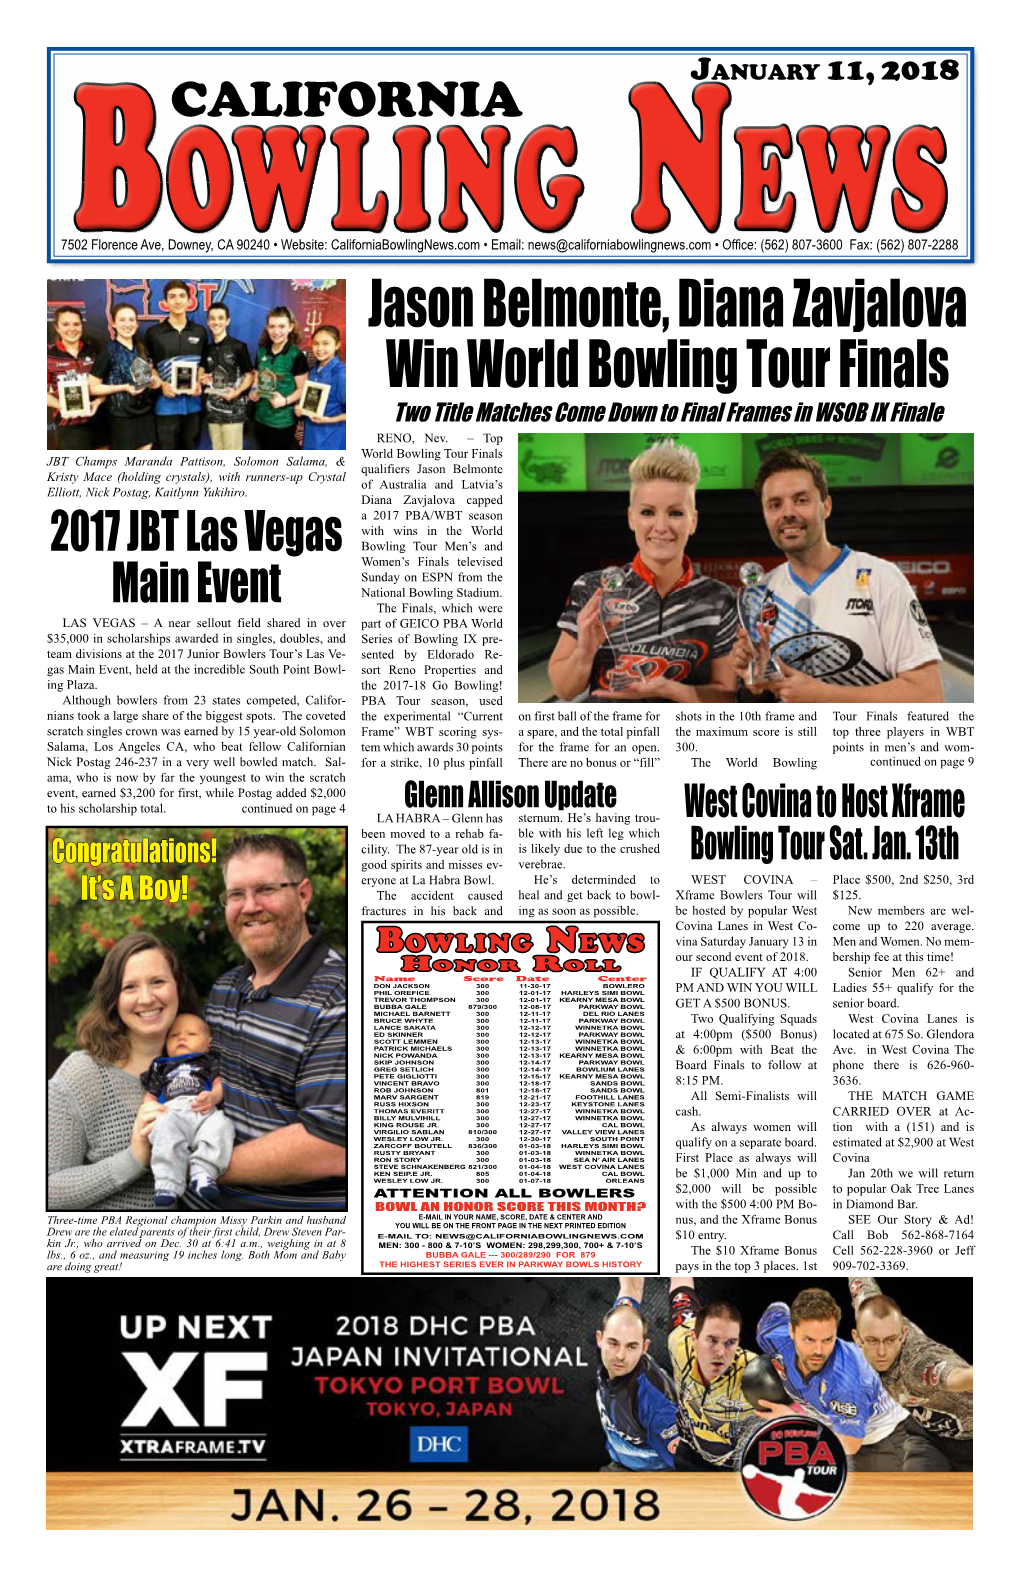 Jason Belmonte, Diana Zavjalova Win World Bowling Tour Finals Two Title Matches Come Down to Final Frames in WSOB IX Finale RENO, Nev